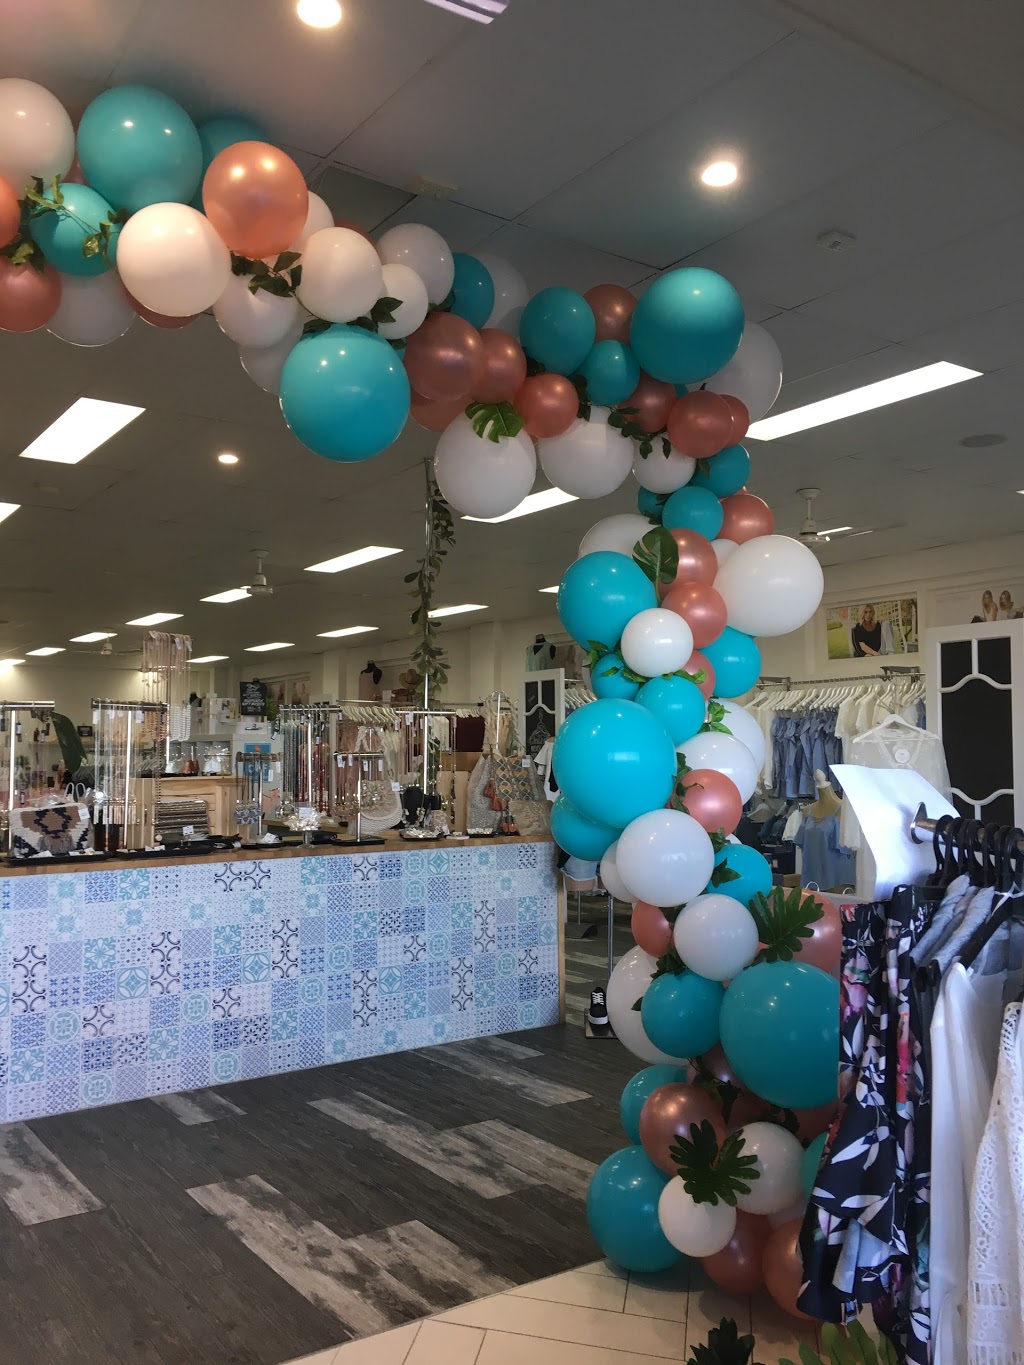 Balloons North Brisbane | home goods store | Bearcat Ct, Bray Park QLD 4500, Australia | 0414459367 OR +61 414 459 367